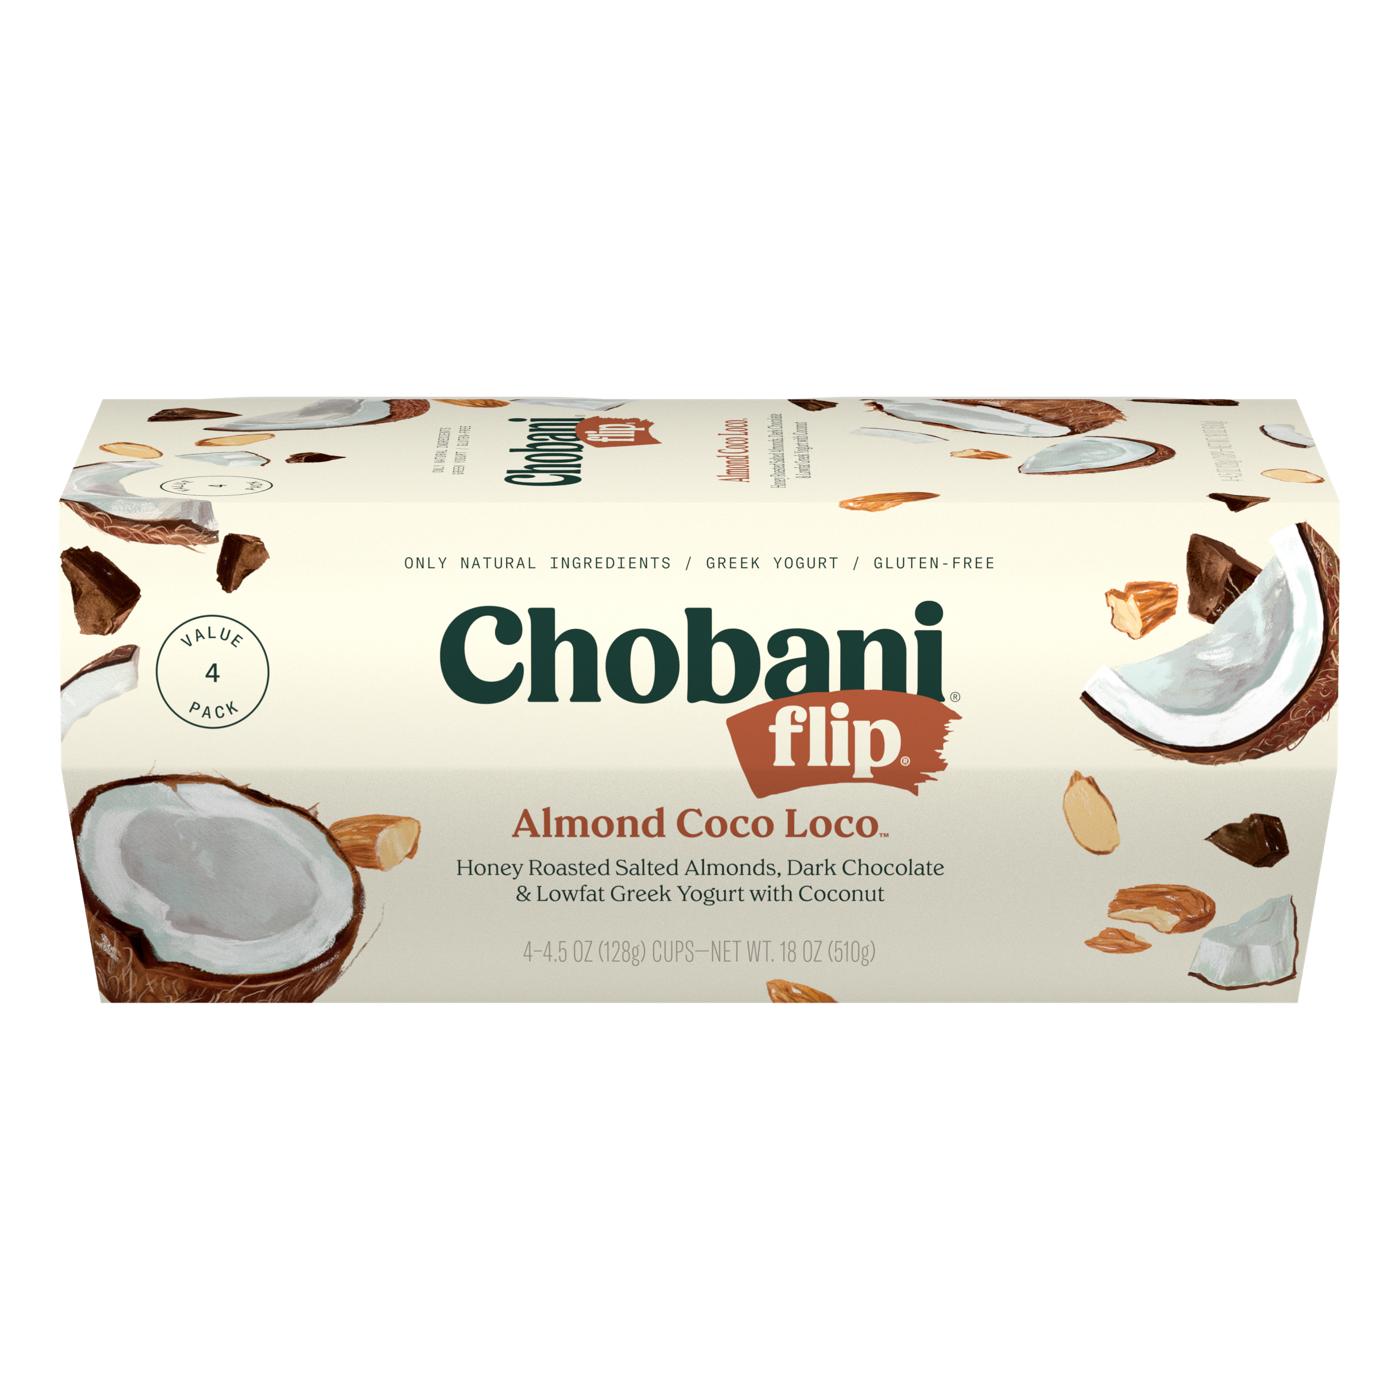 Chobani Flip Low-Fat Almond Coco Loco Greek Yogurt; image 1 of 2